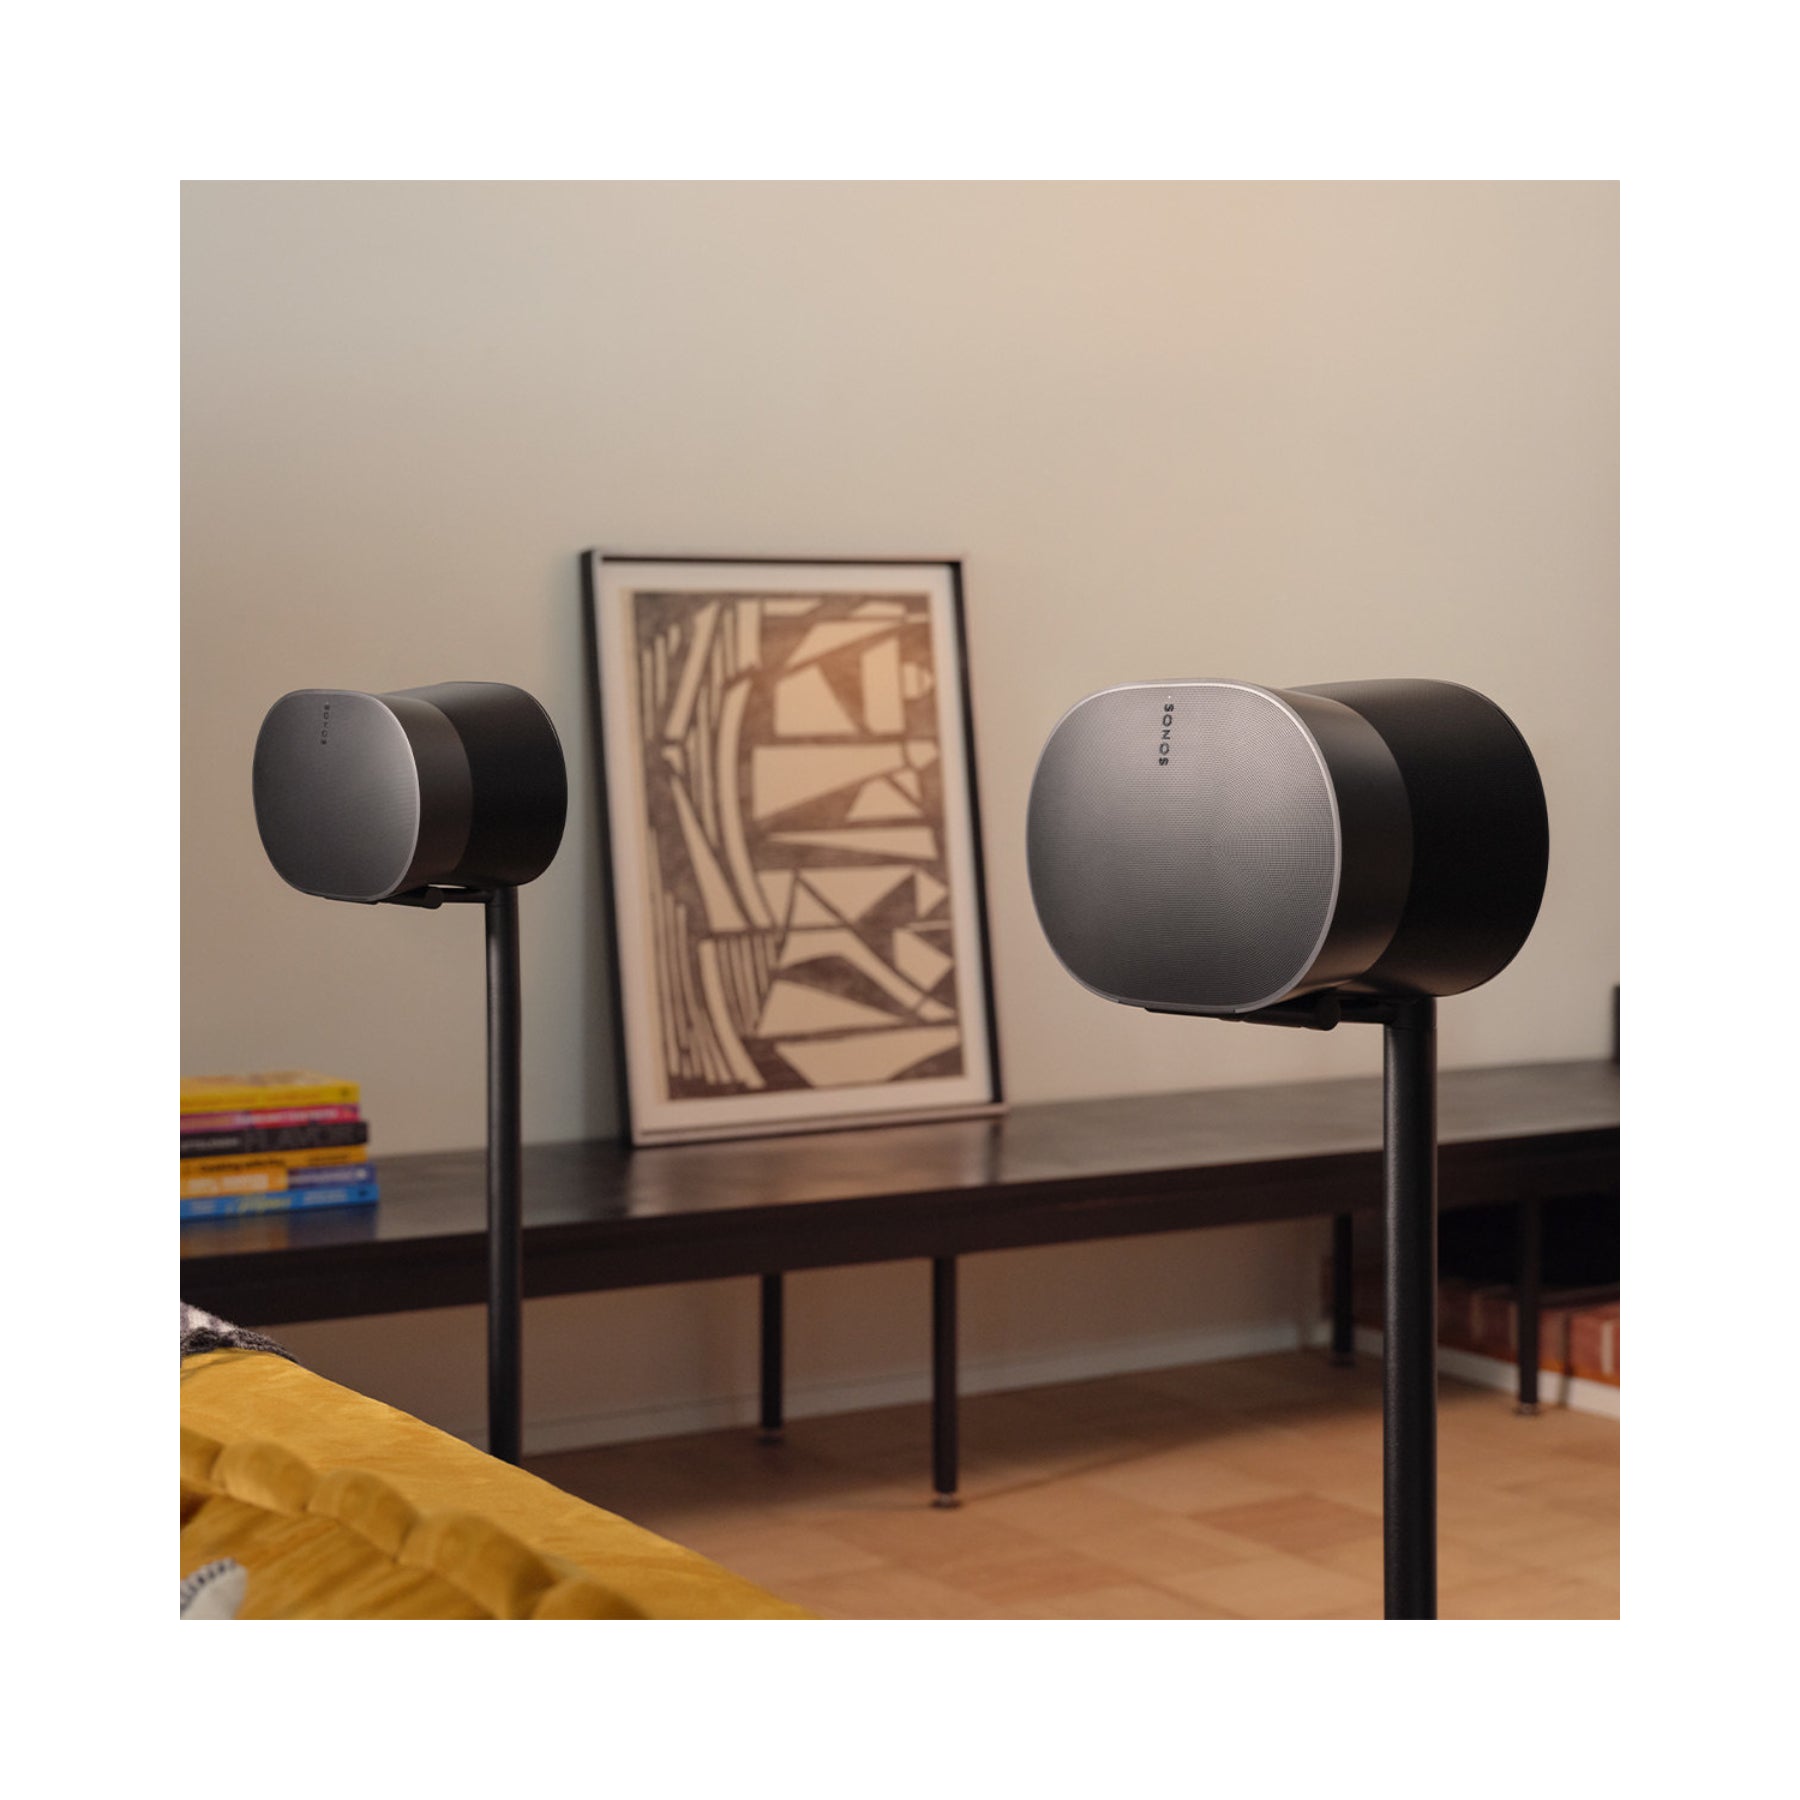 SANUS WSSE32, Designed For Sonos, Speaker Mounts and Stands, Products